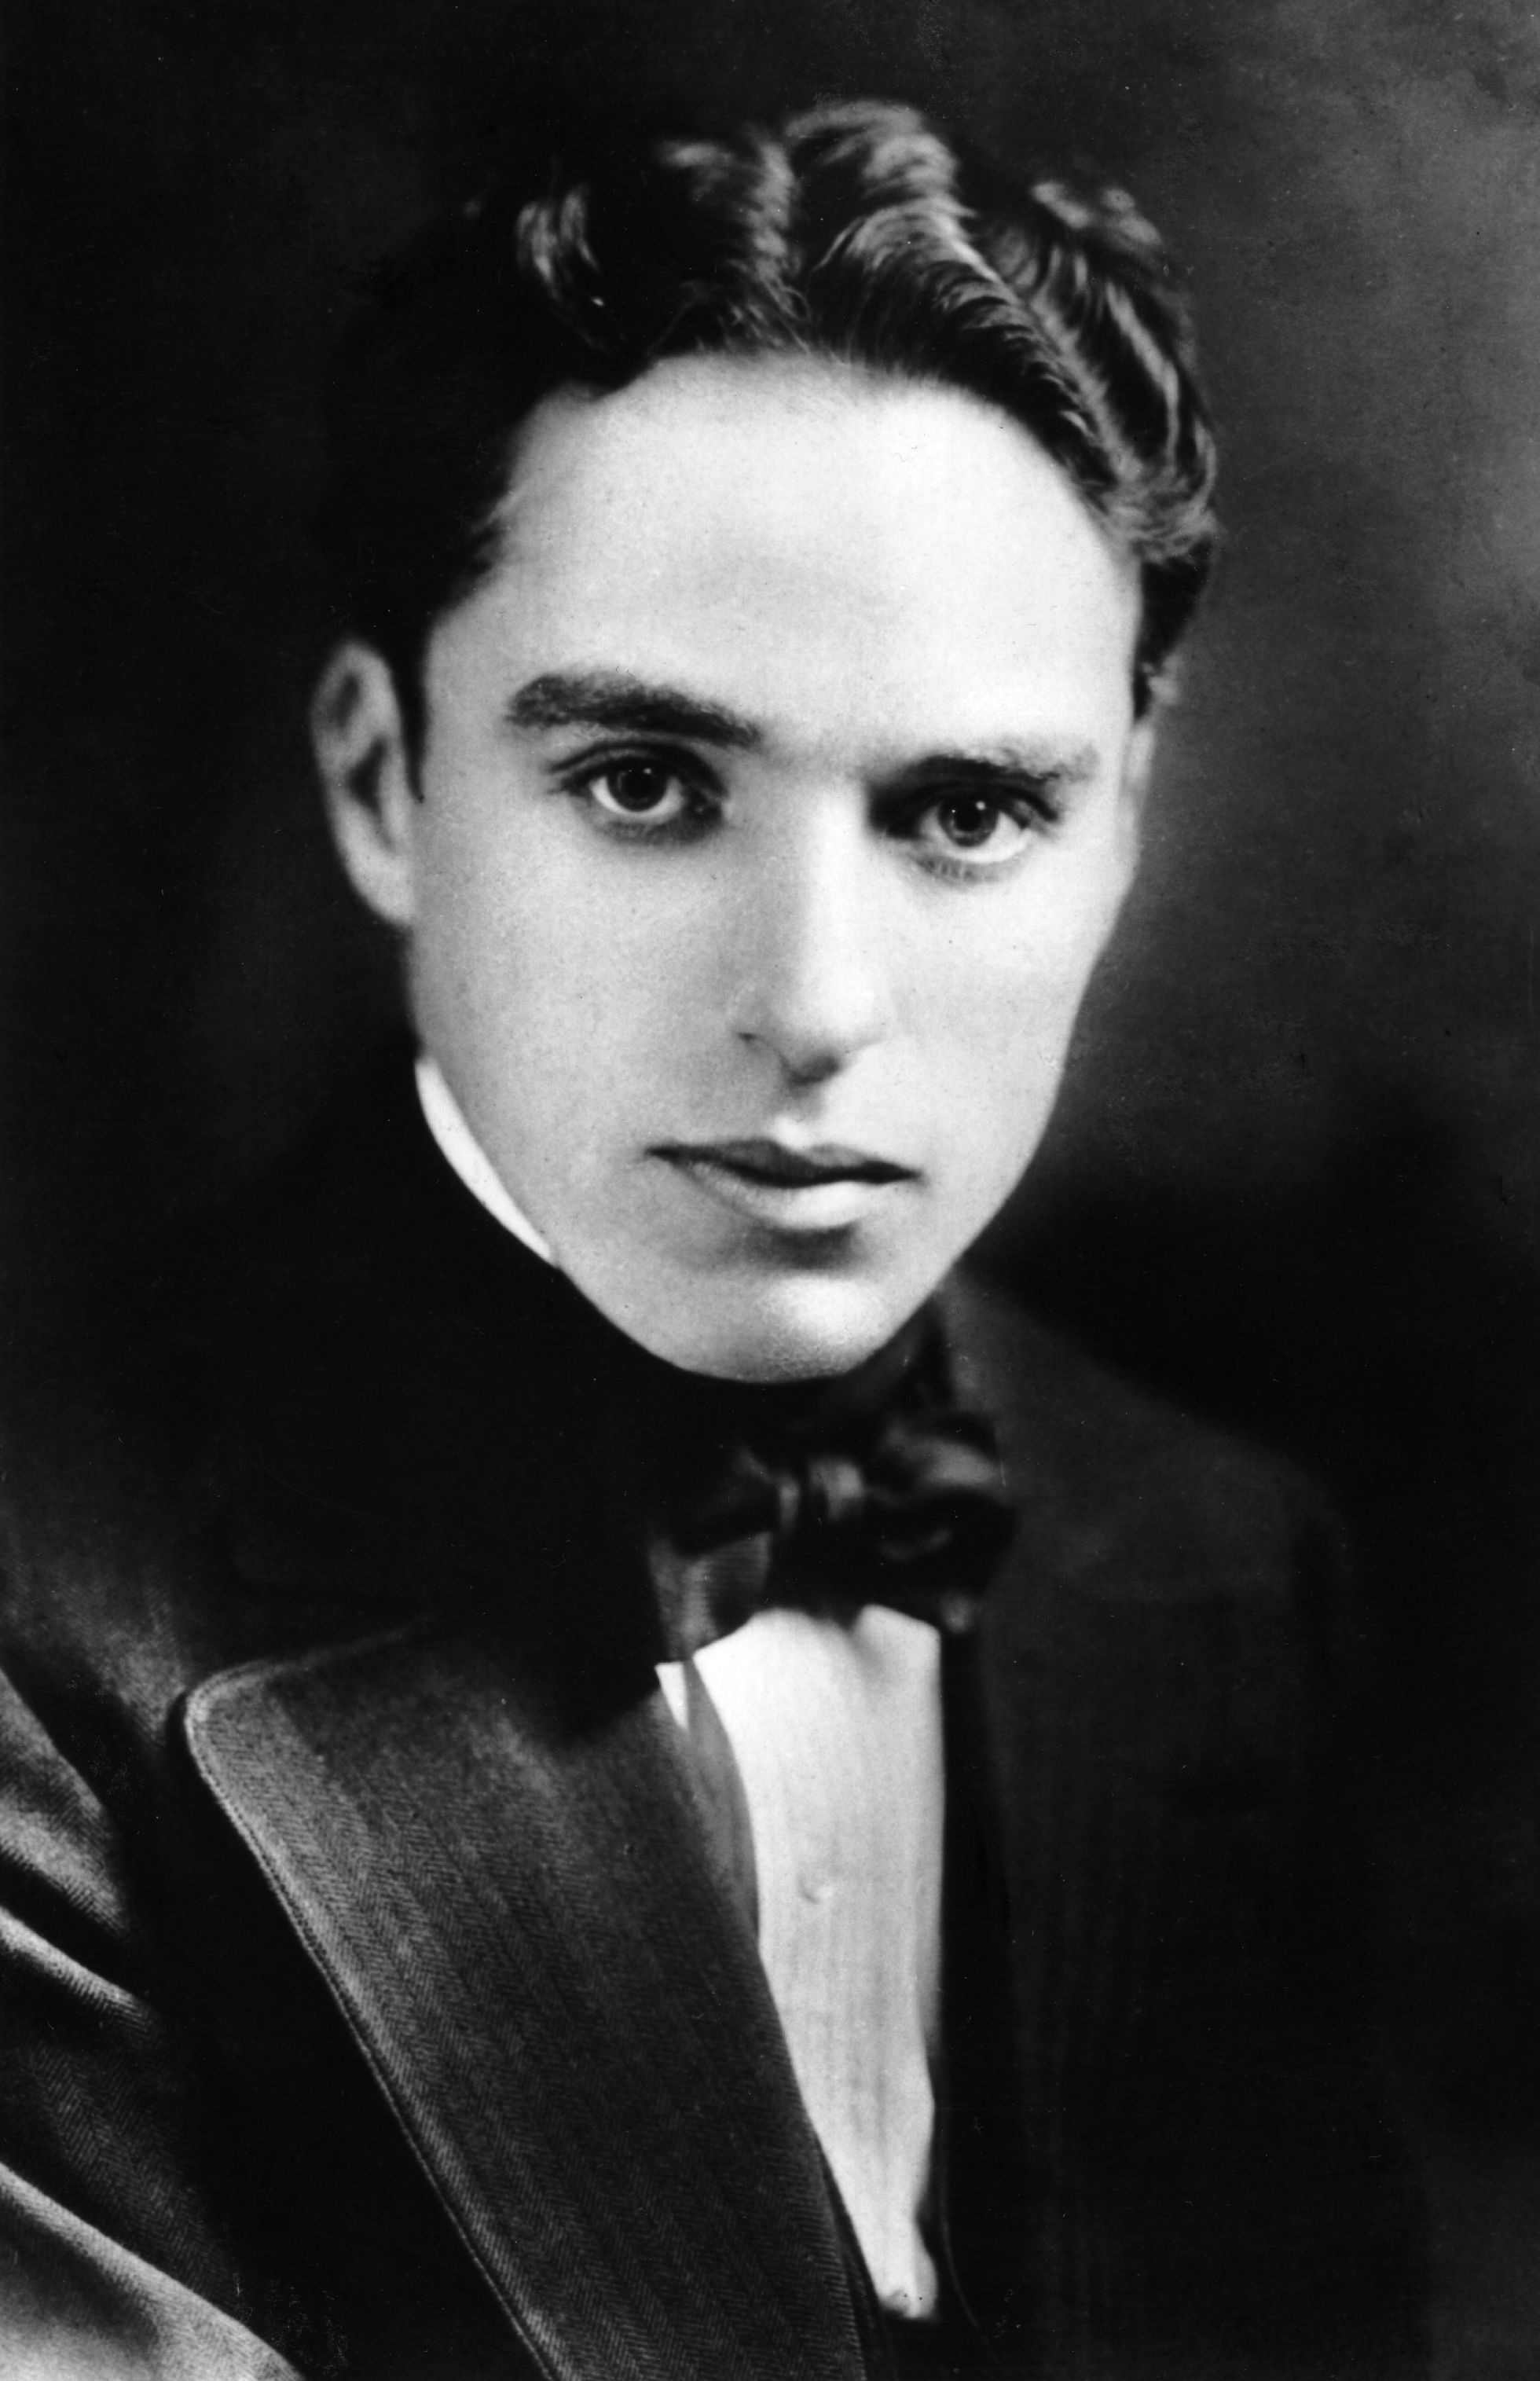 RAUM S3 002 Charles Chaplin (1889-1977): The